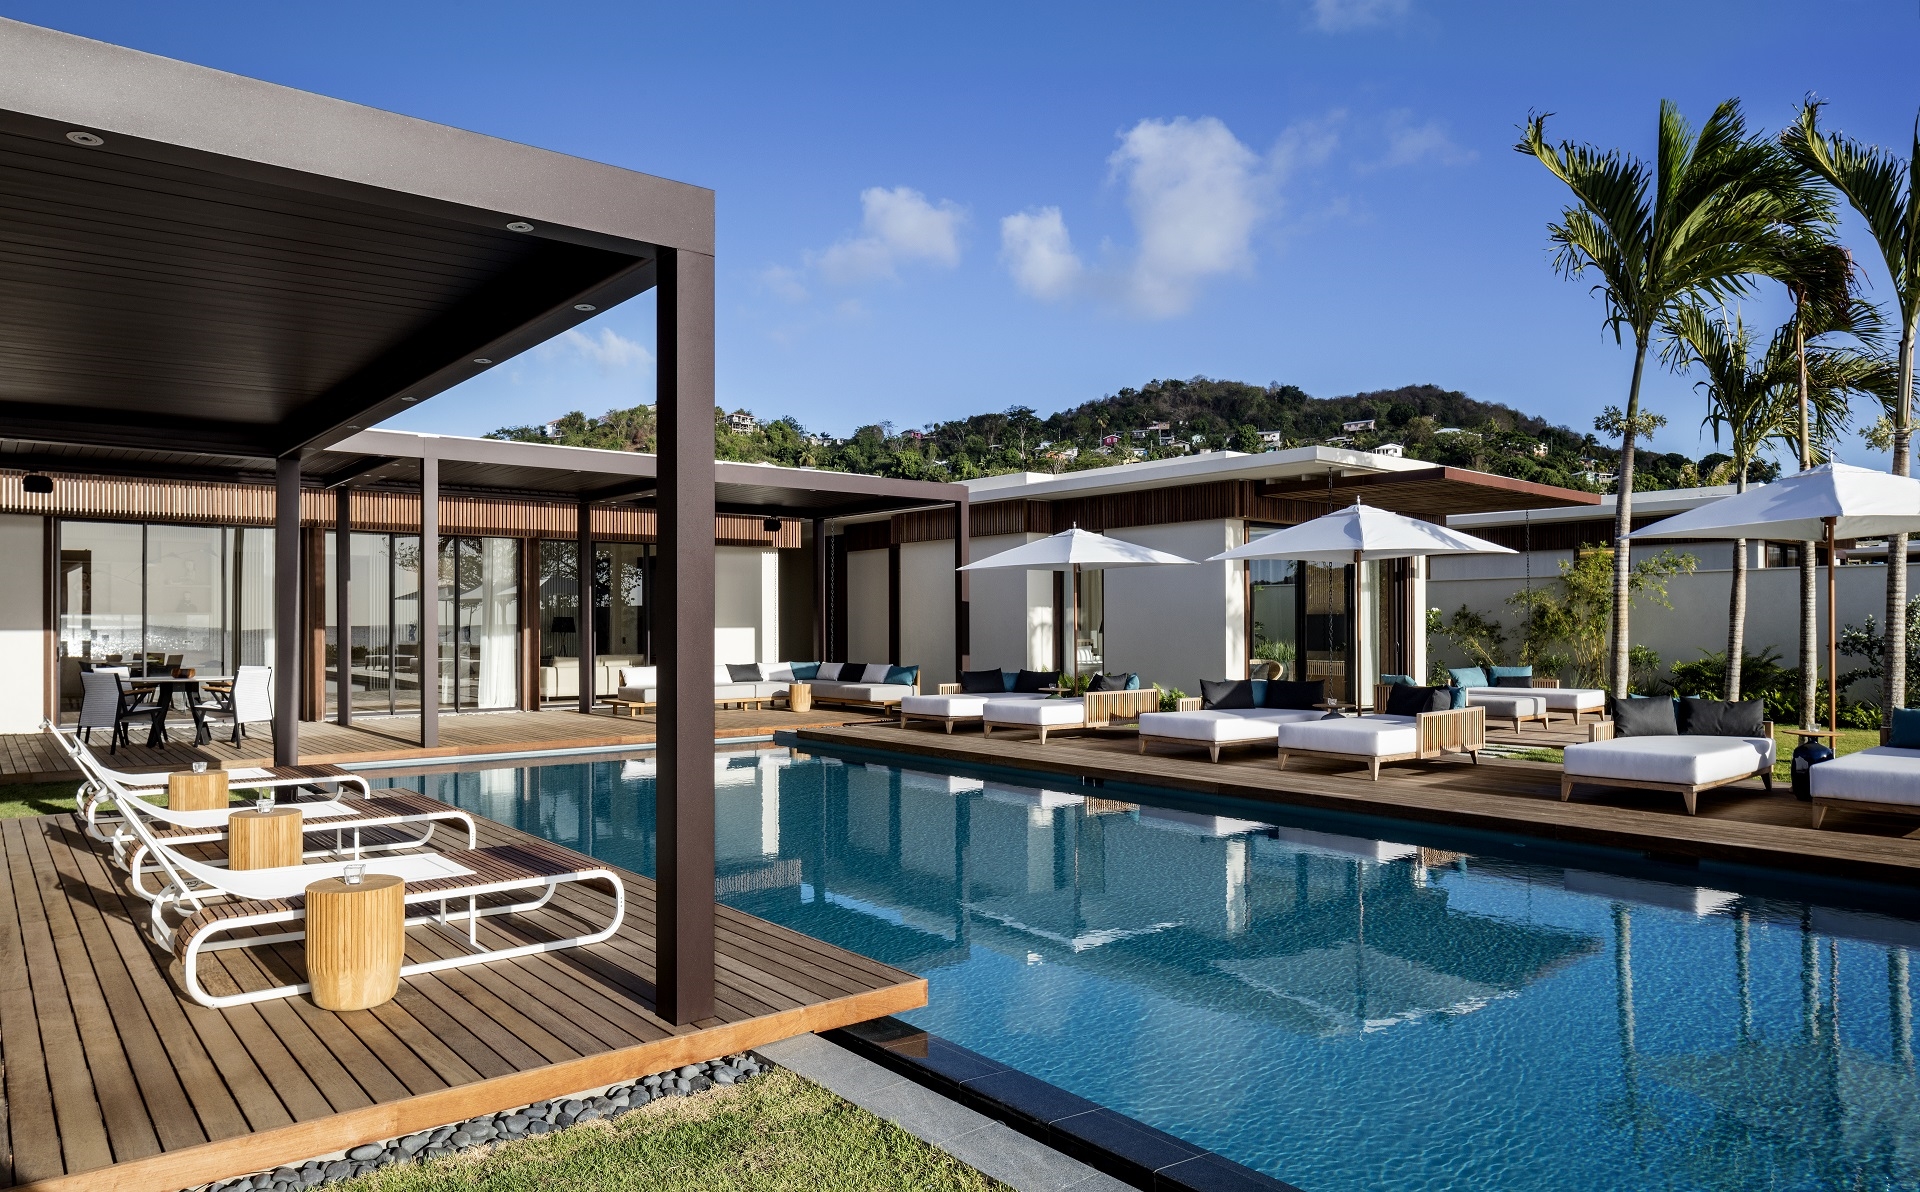 Beachfront Villa pool and deck